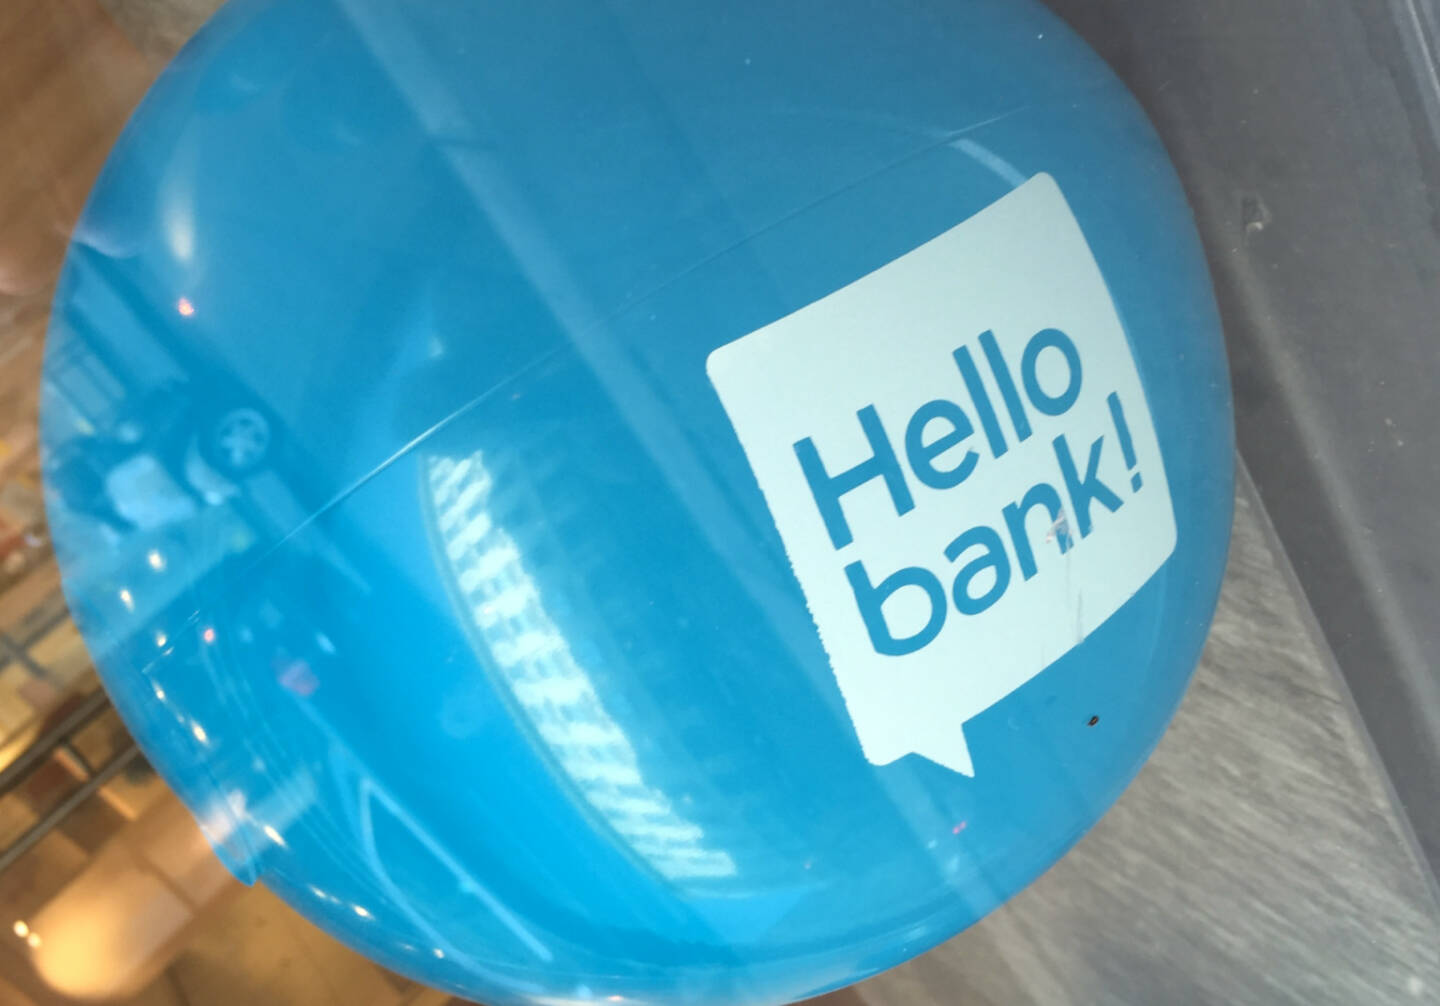 Hello bank